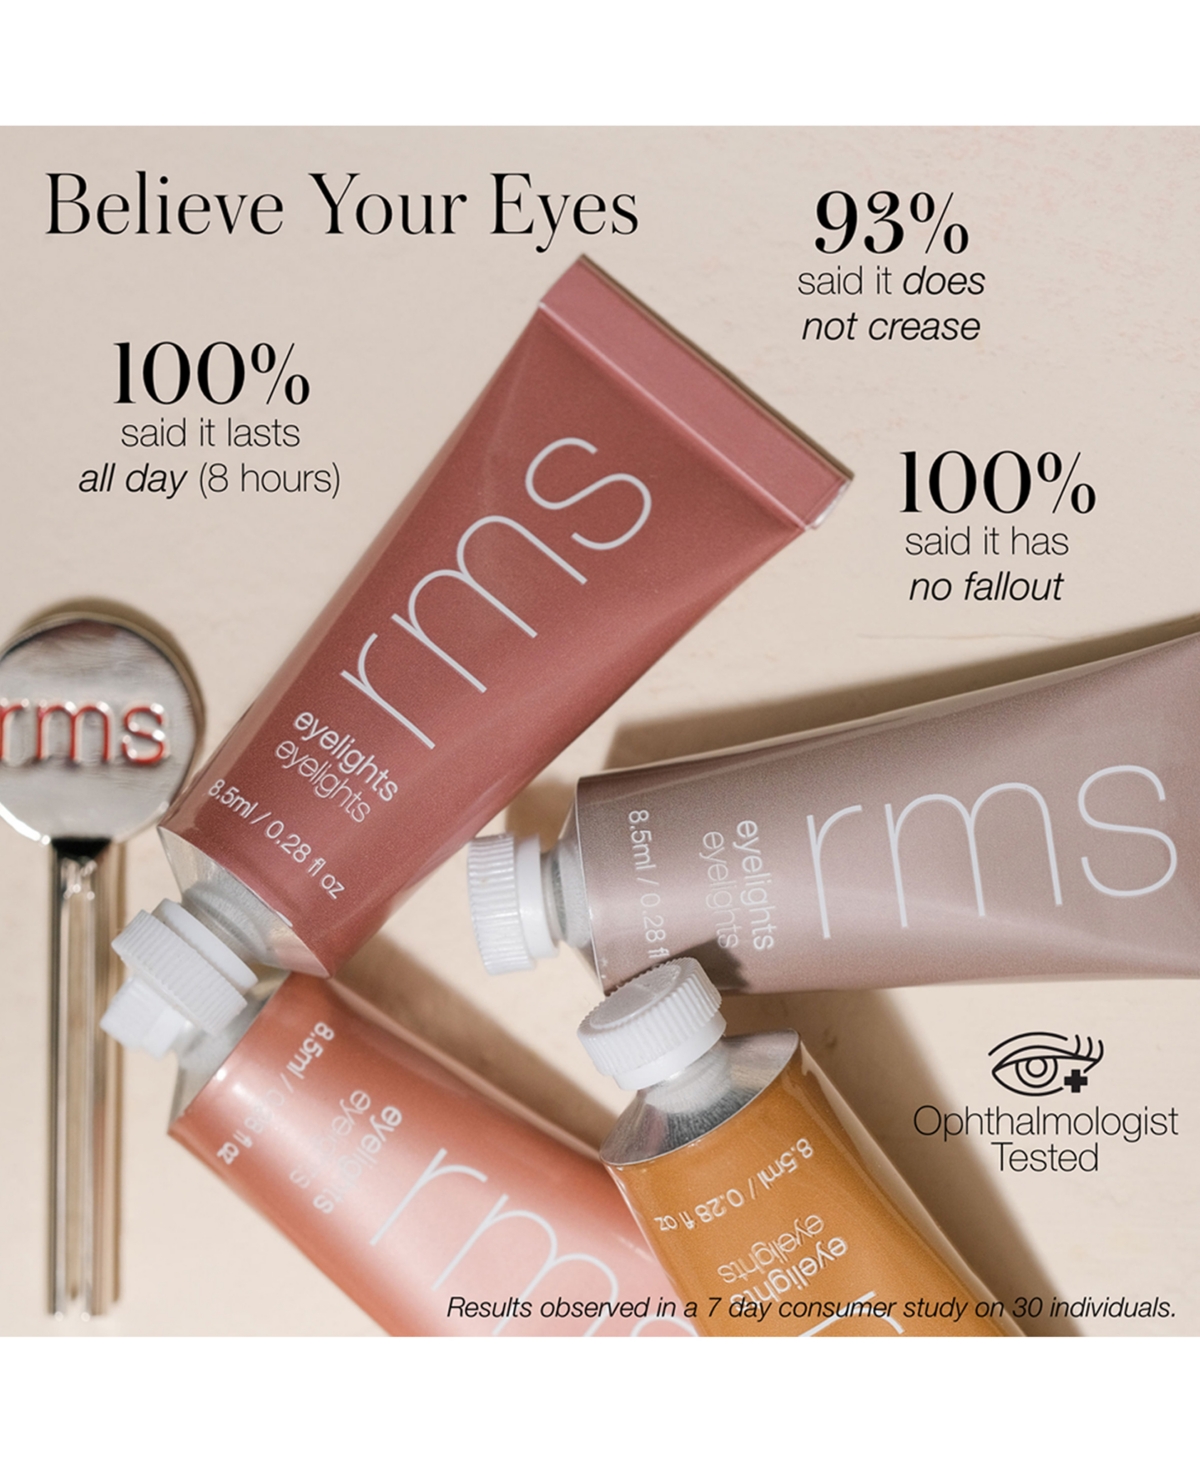 Shop Rms Beauty Eyelights Cream Eyeshadow In Eclipse